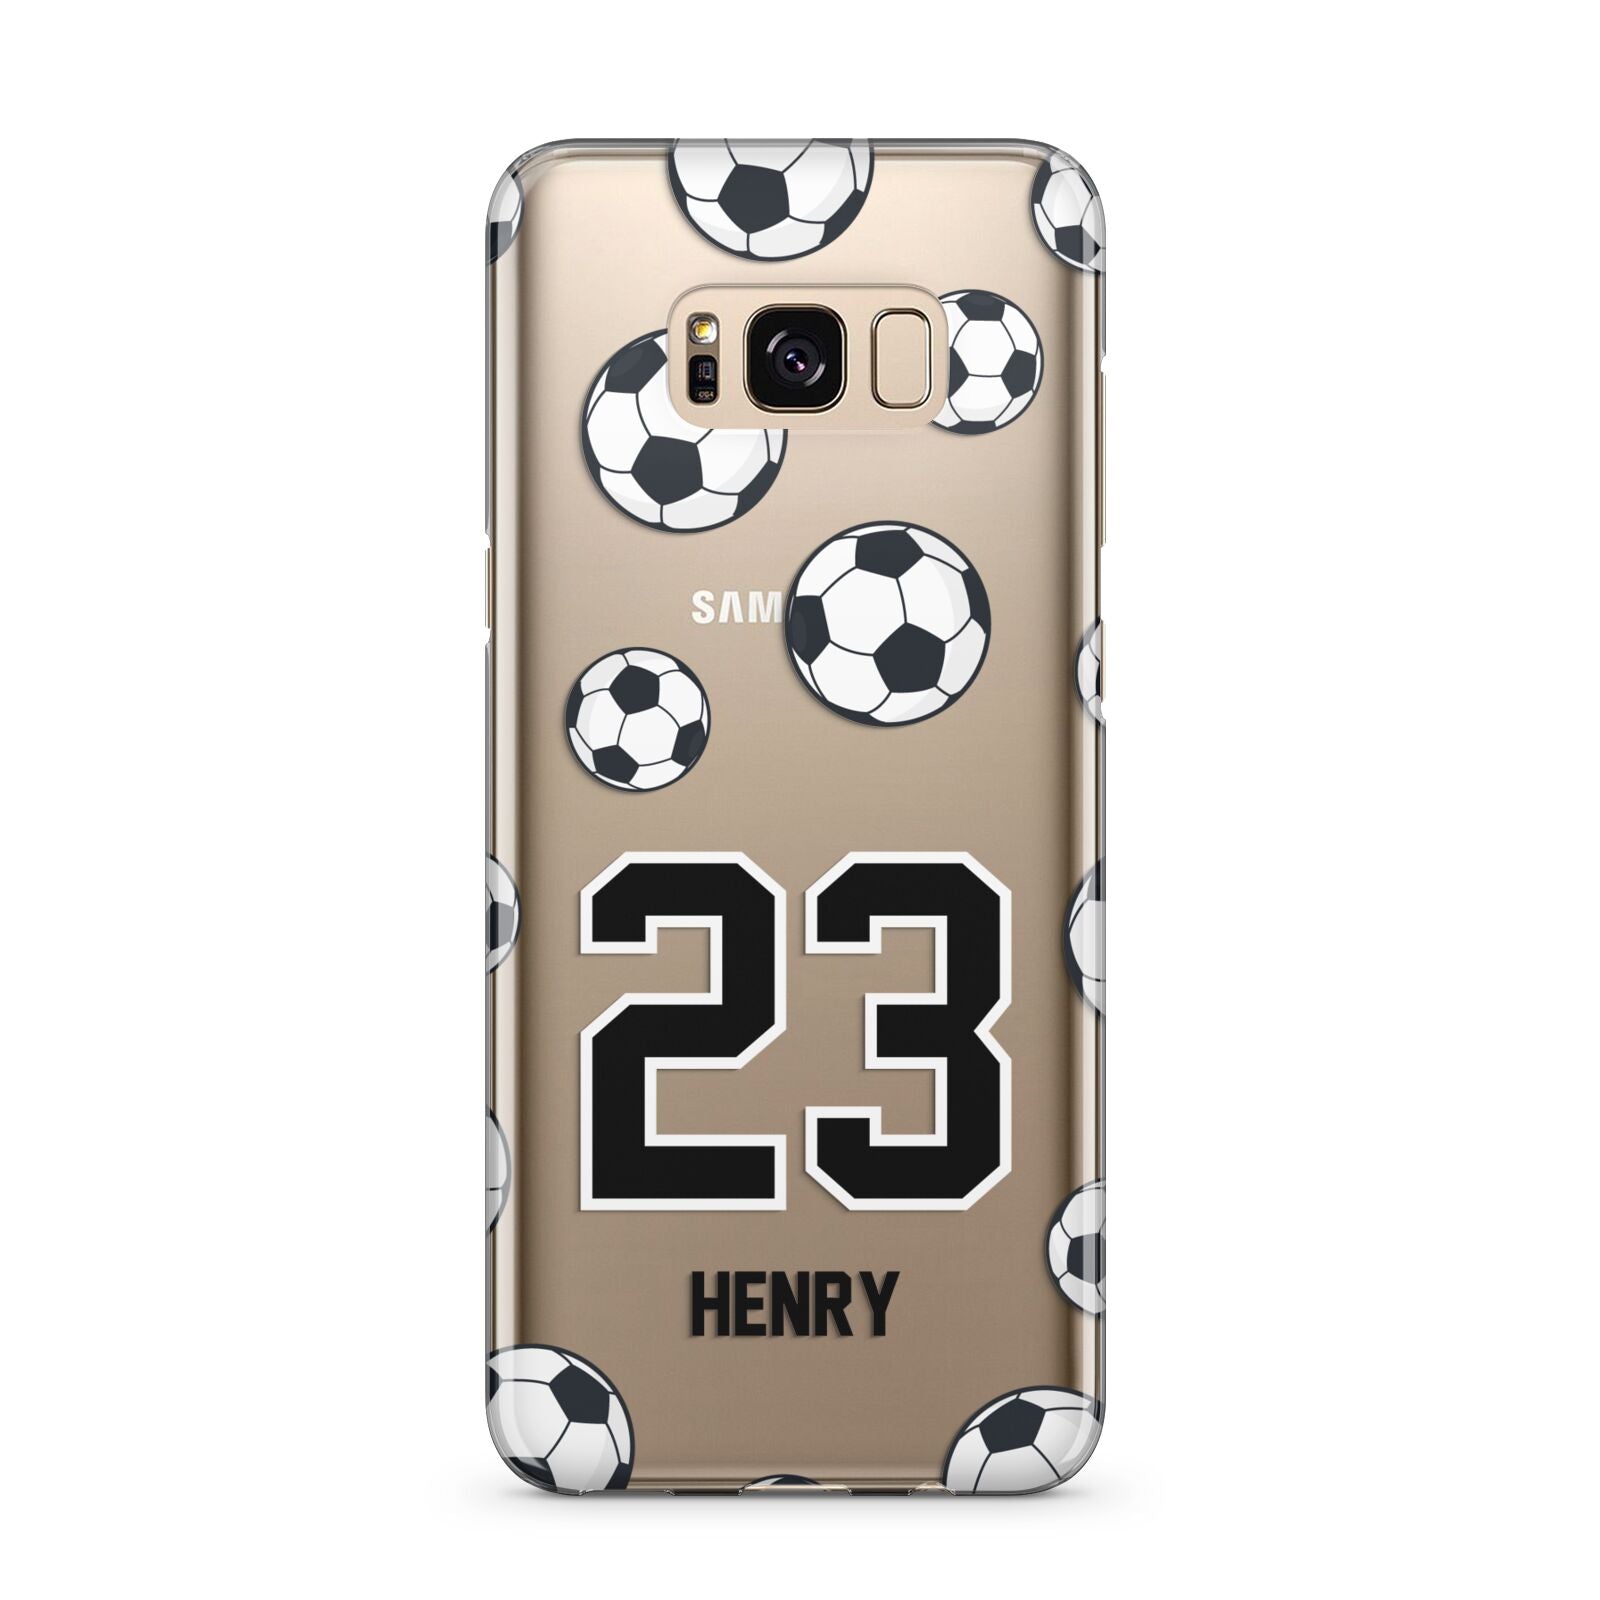 Personalised Football Samsung Galaxy S8 Plus Case